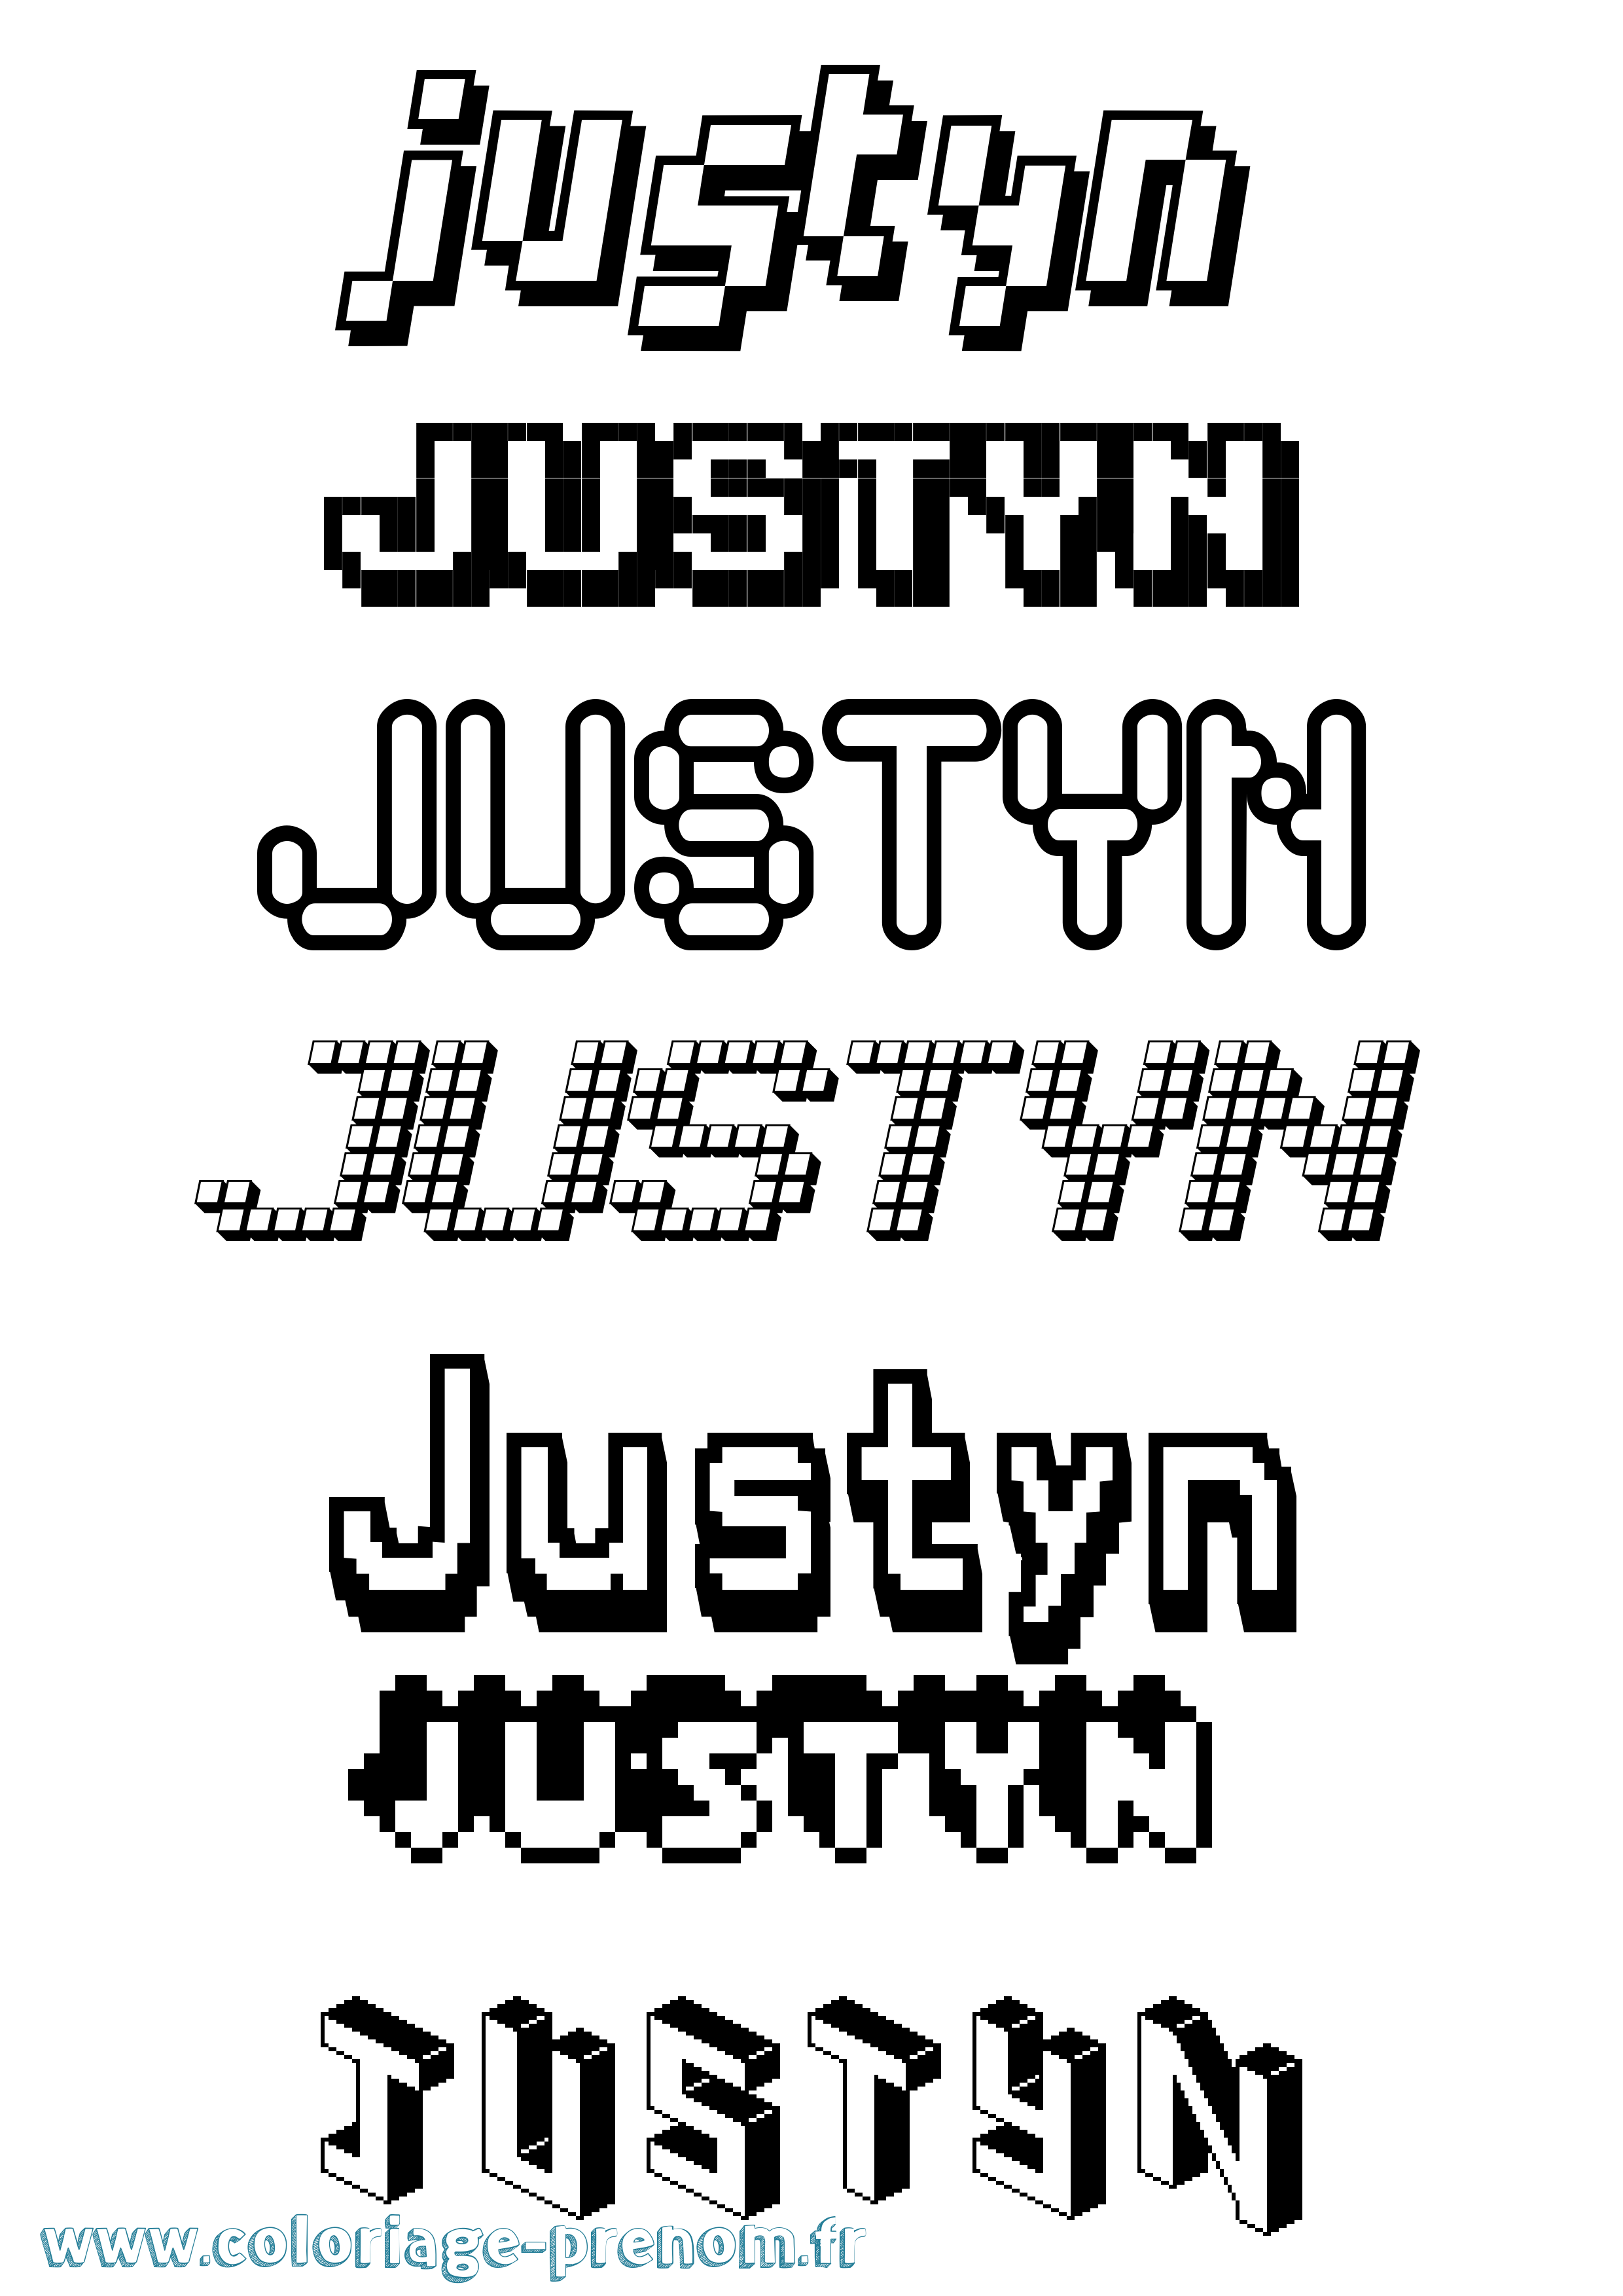 Coloriage prénom Justyn Pixel